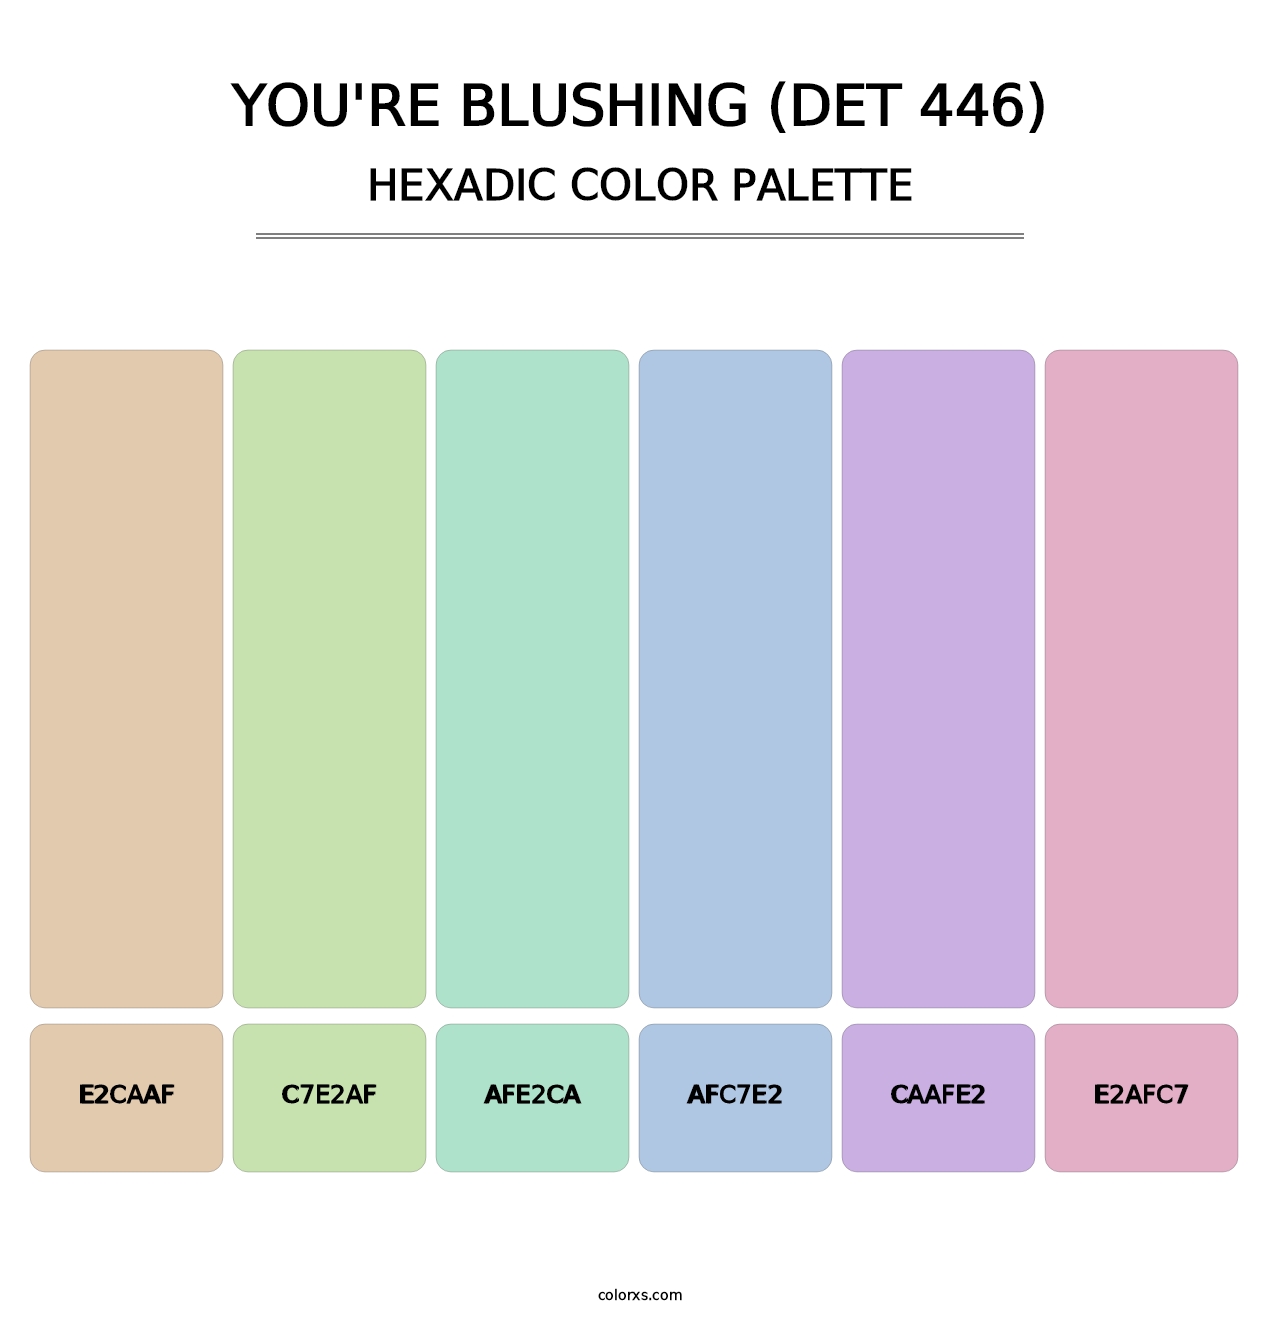 You're Blushing (DET 446) - Hexadic Color Palette